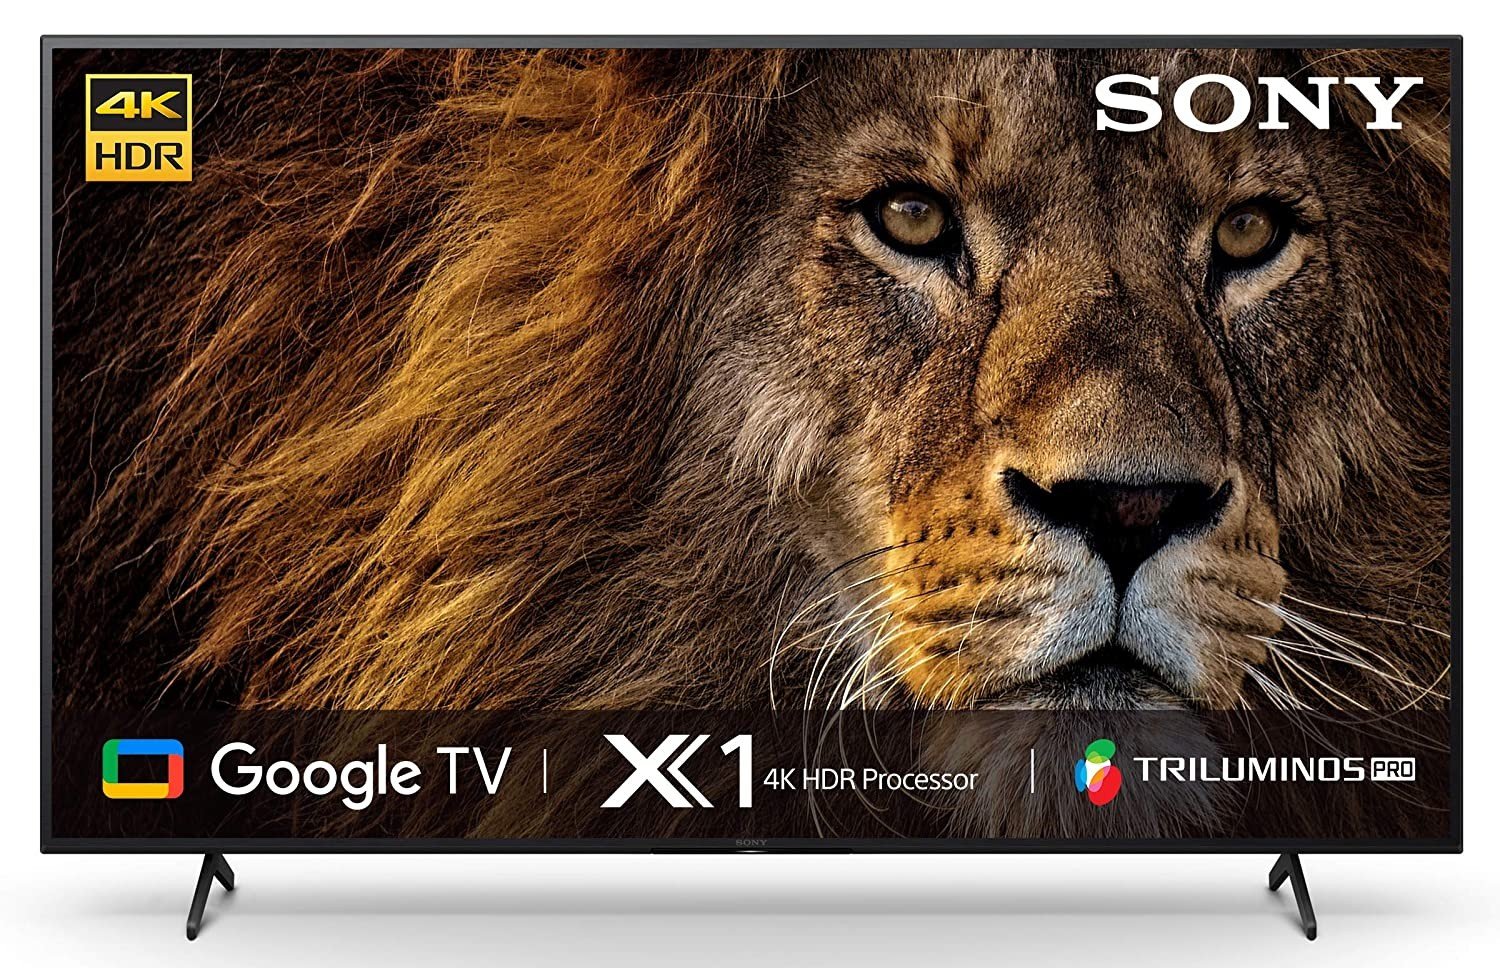 Sony Bravia 139 cm (55 inches) 4K Ultra HD Smart LED Google TV KD-55X80AJ  (Black) (2021 Model) | with Alexa Compatibility